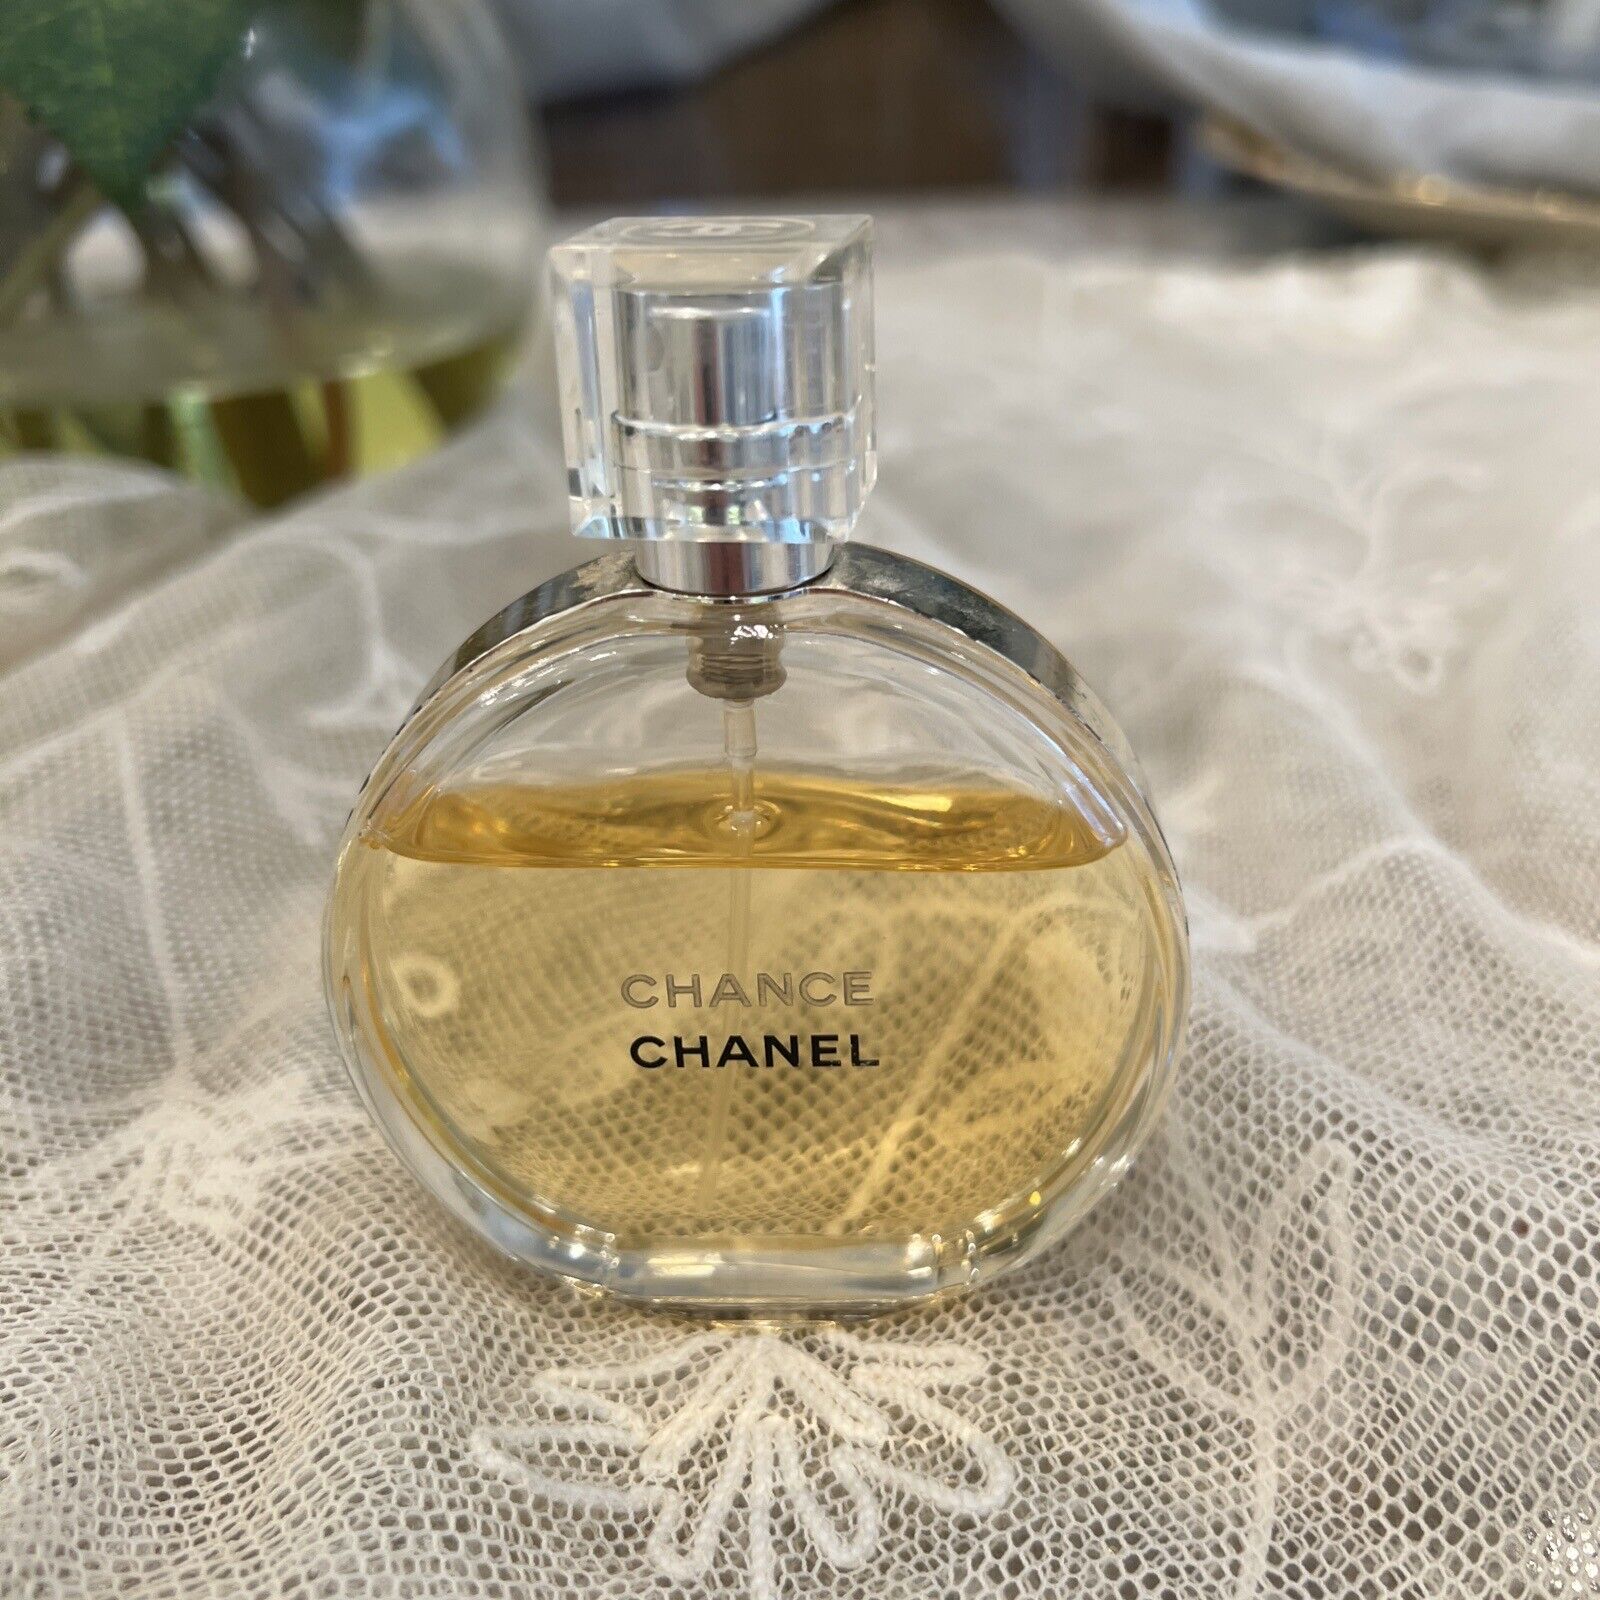 VTG Chance Chanel By CHANEL Perfume Women 1.7 oz 50 ml Eau De Toilette Spray 75%